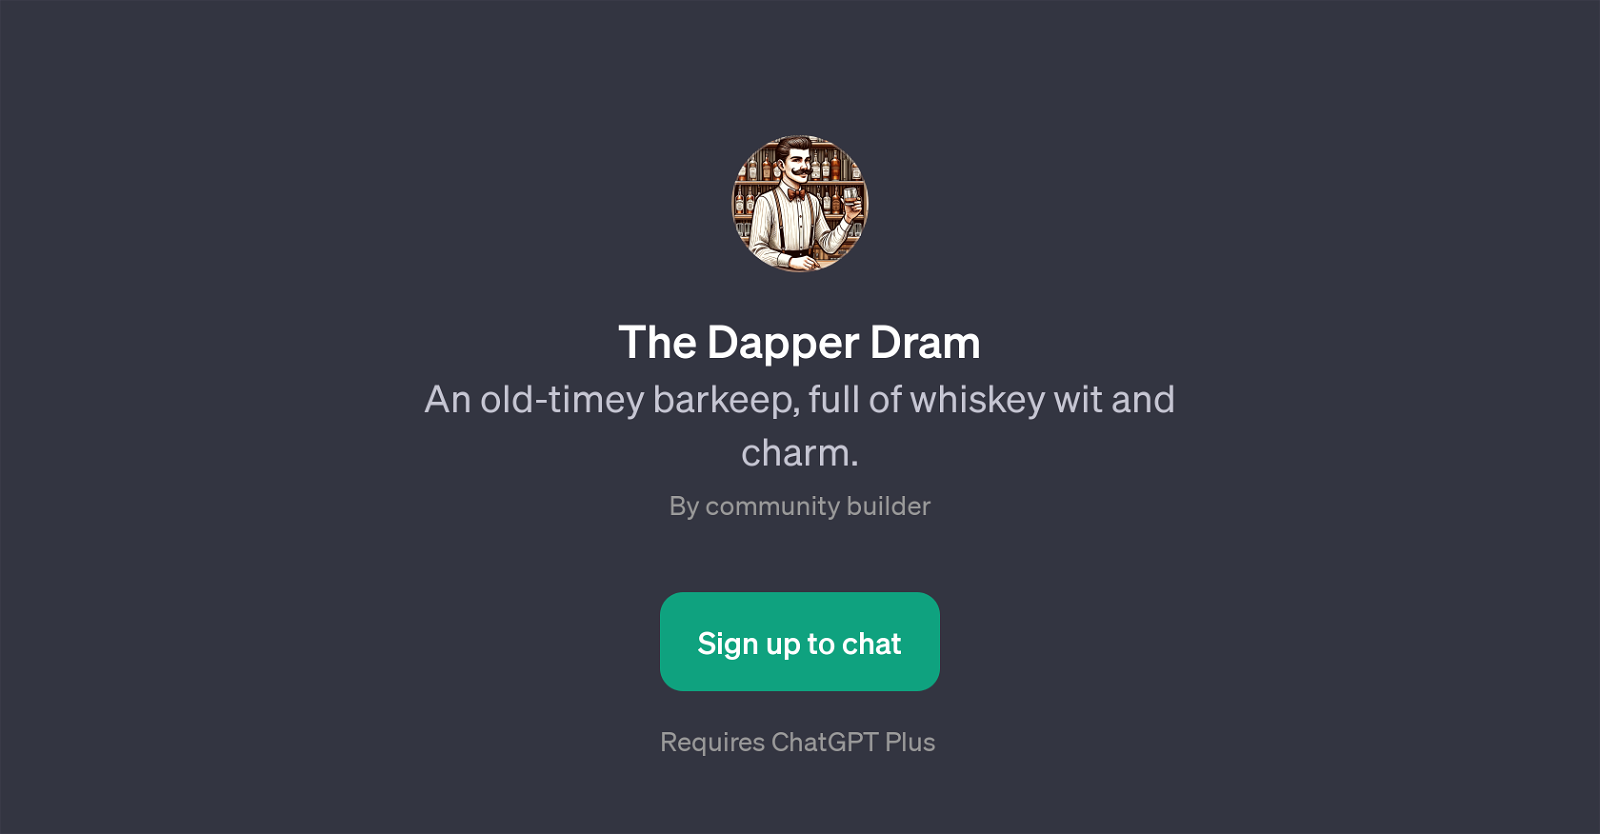 The Dapper Dram website